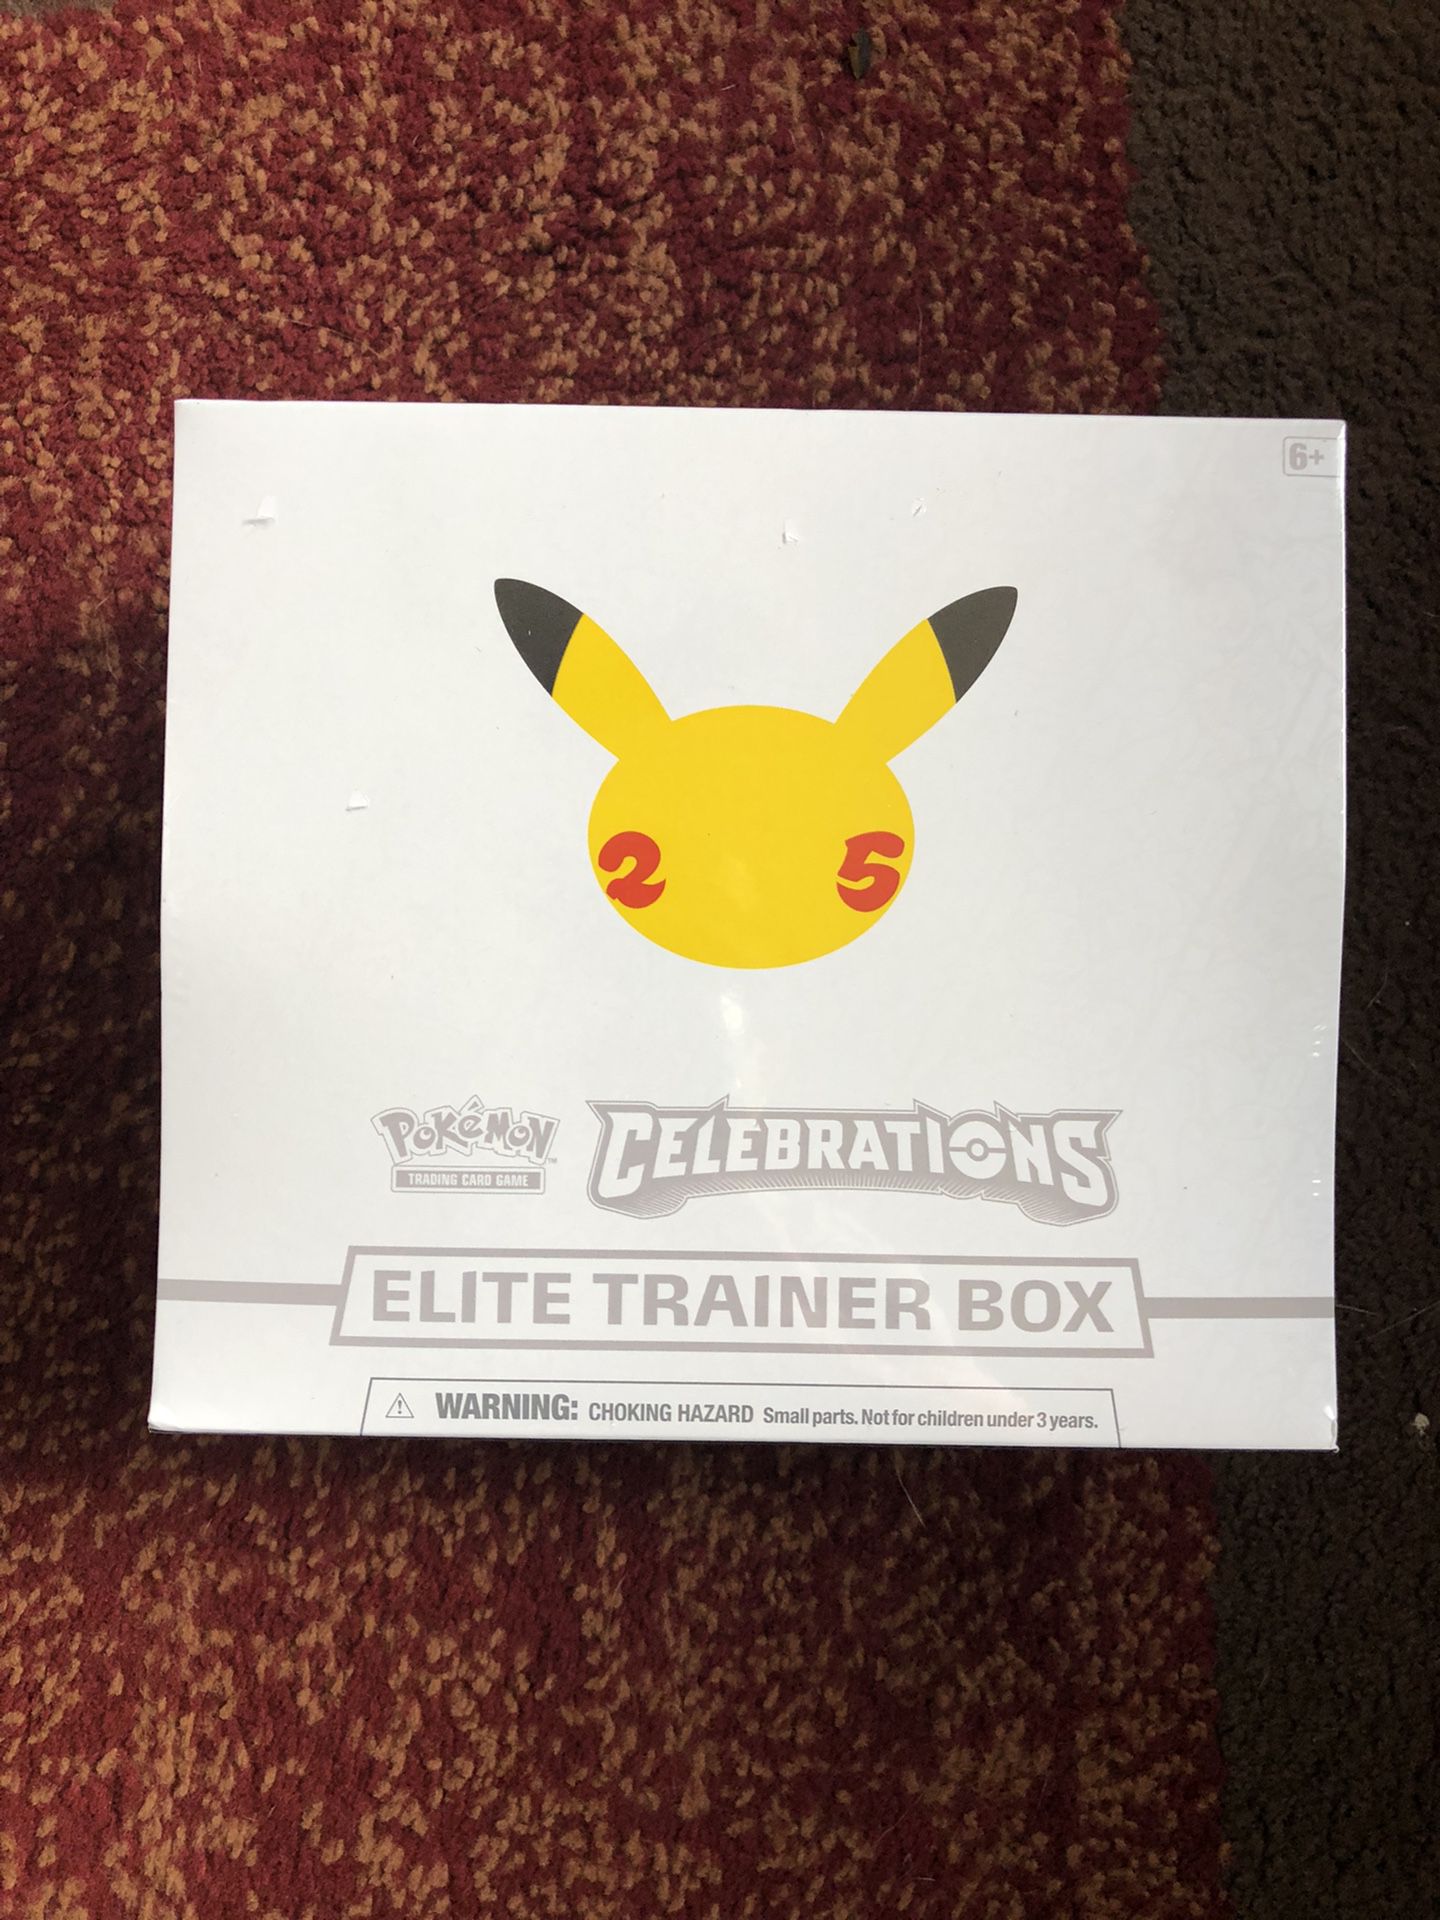 The Pokémon TCG: Celebrations Elite Trainer Box